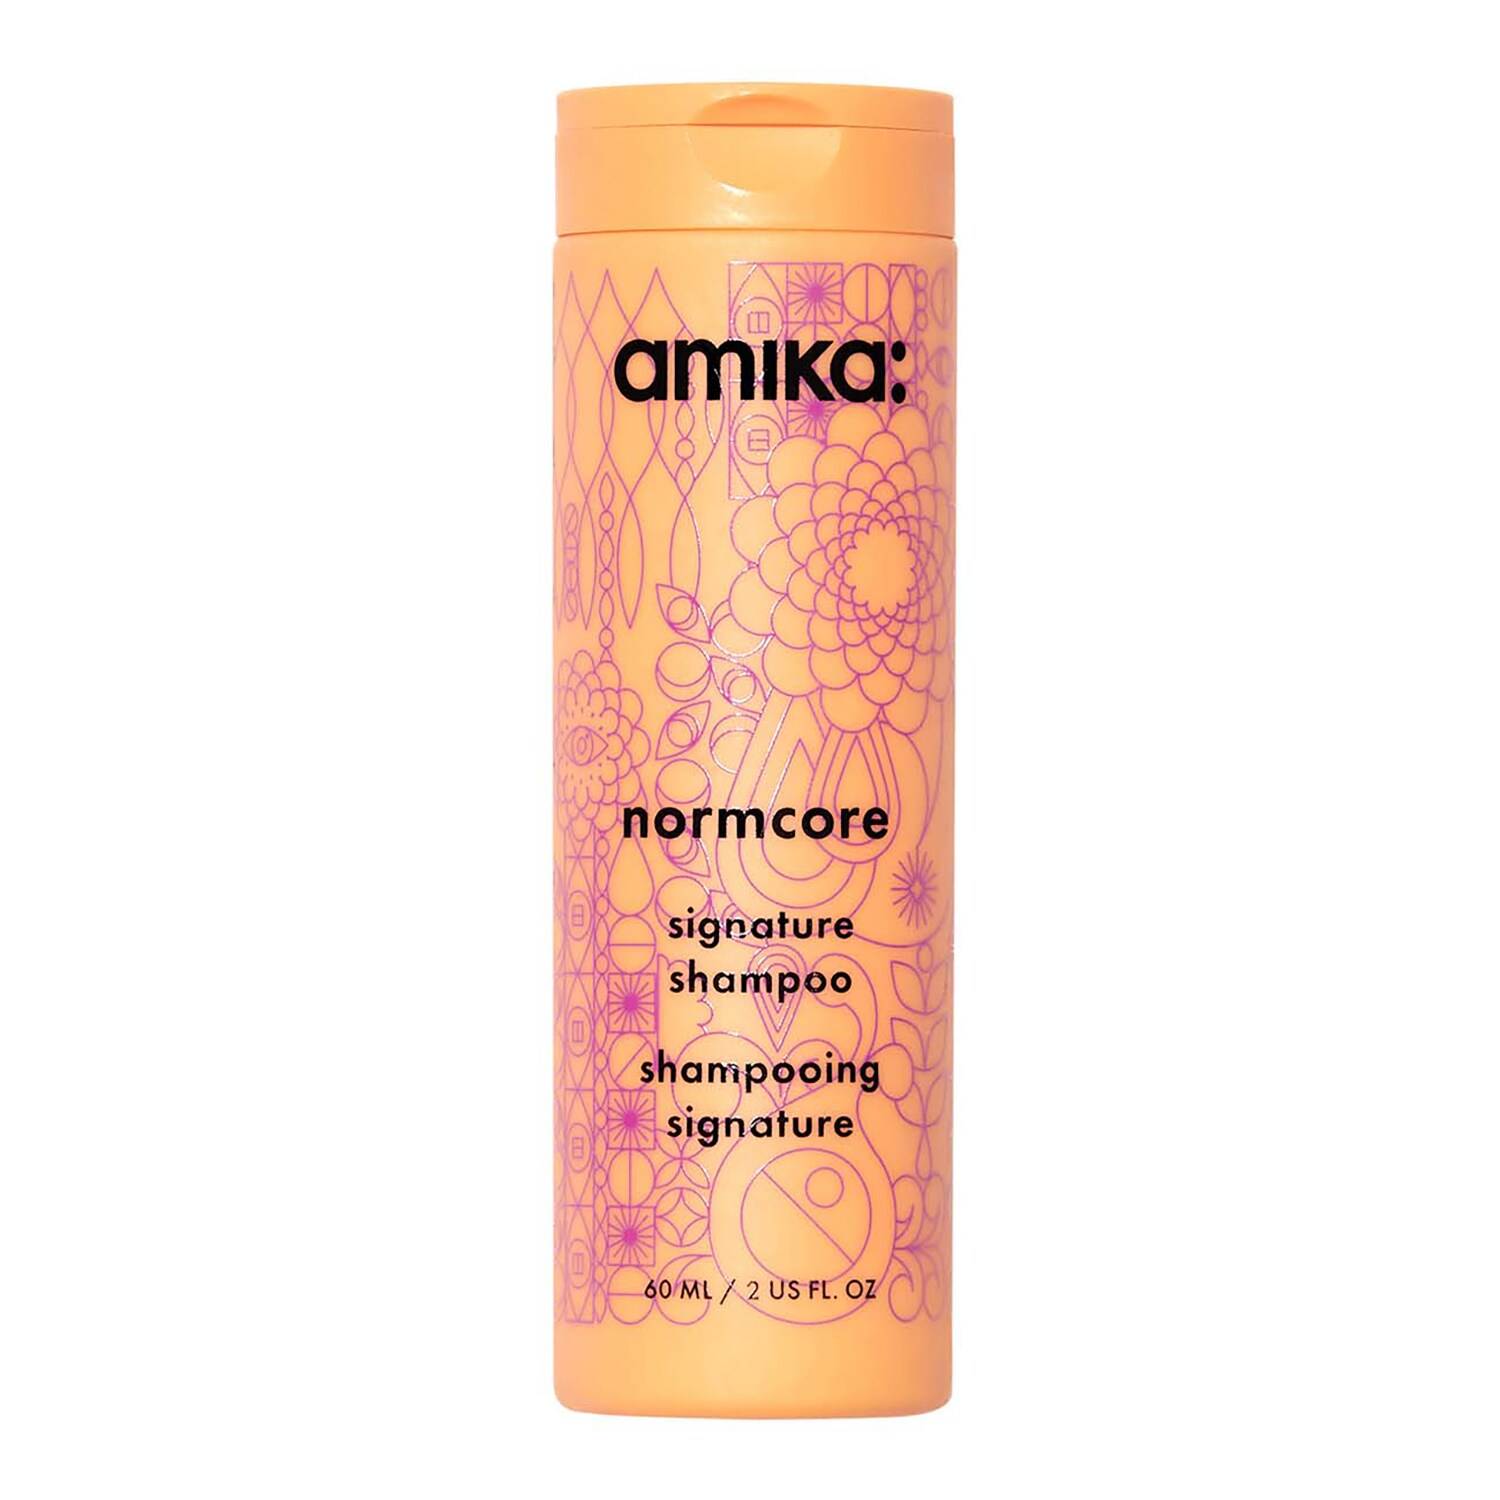 Amika Normcore Signature Shampoo 60Ml